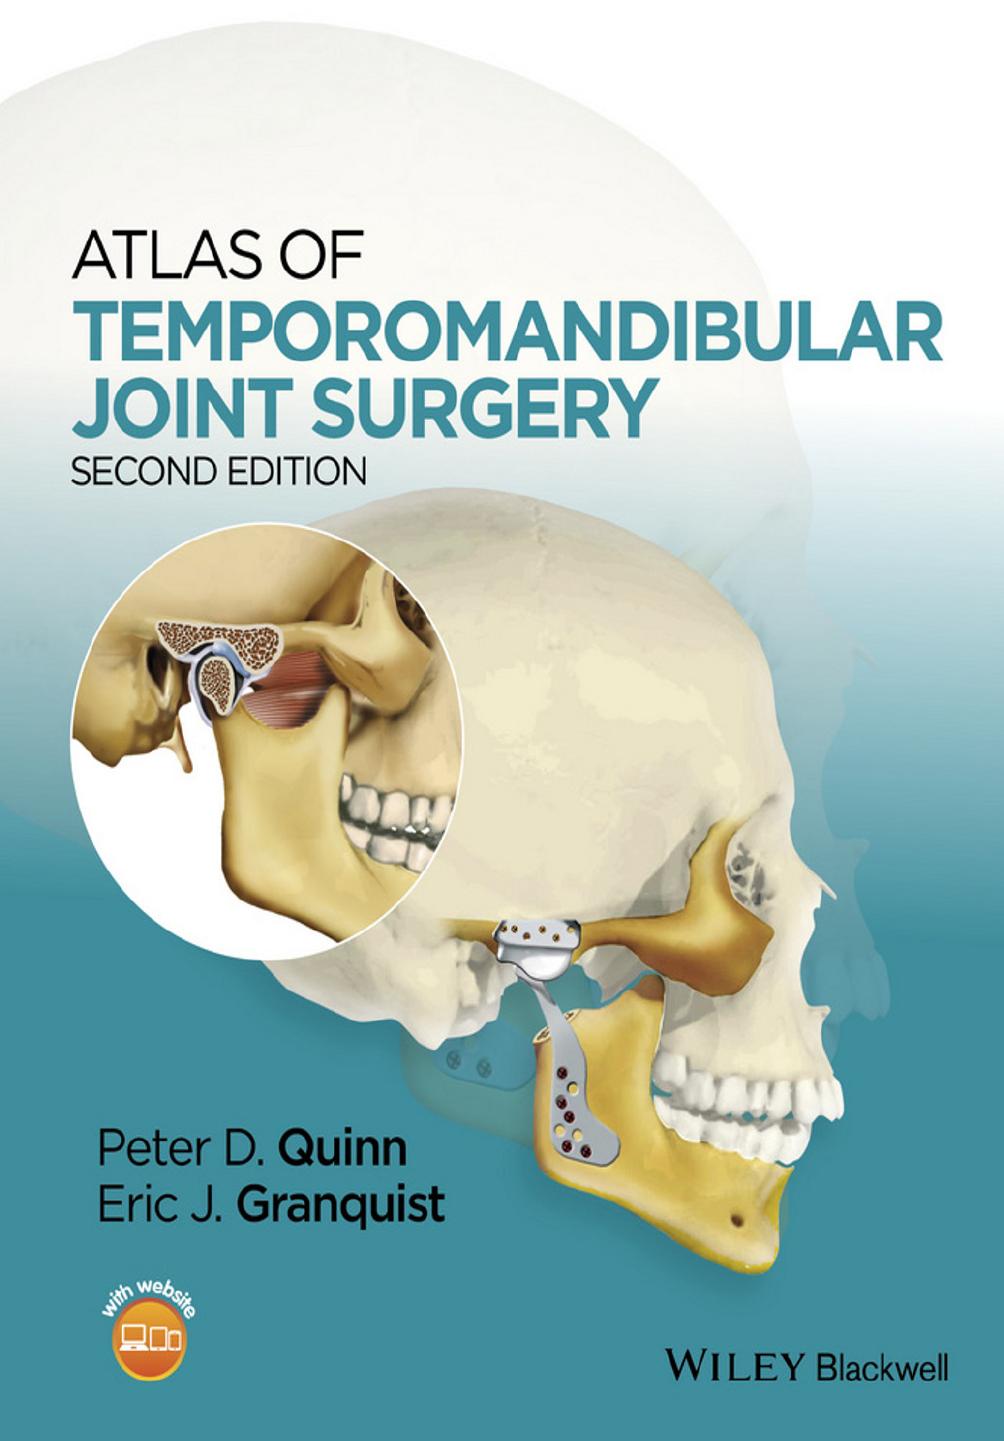 Atlas of Temporomandibular Joint Surgery by Peter D. Quinn 